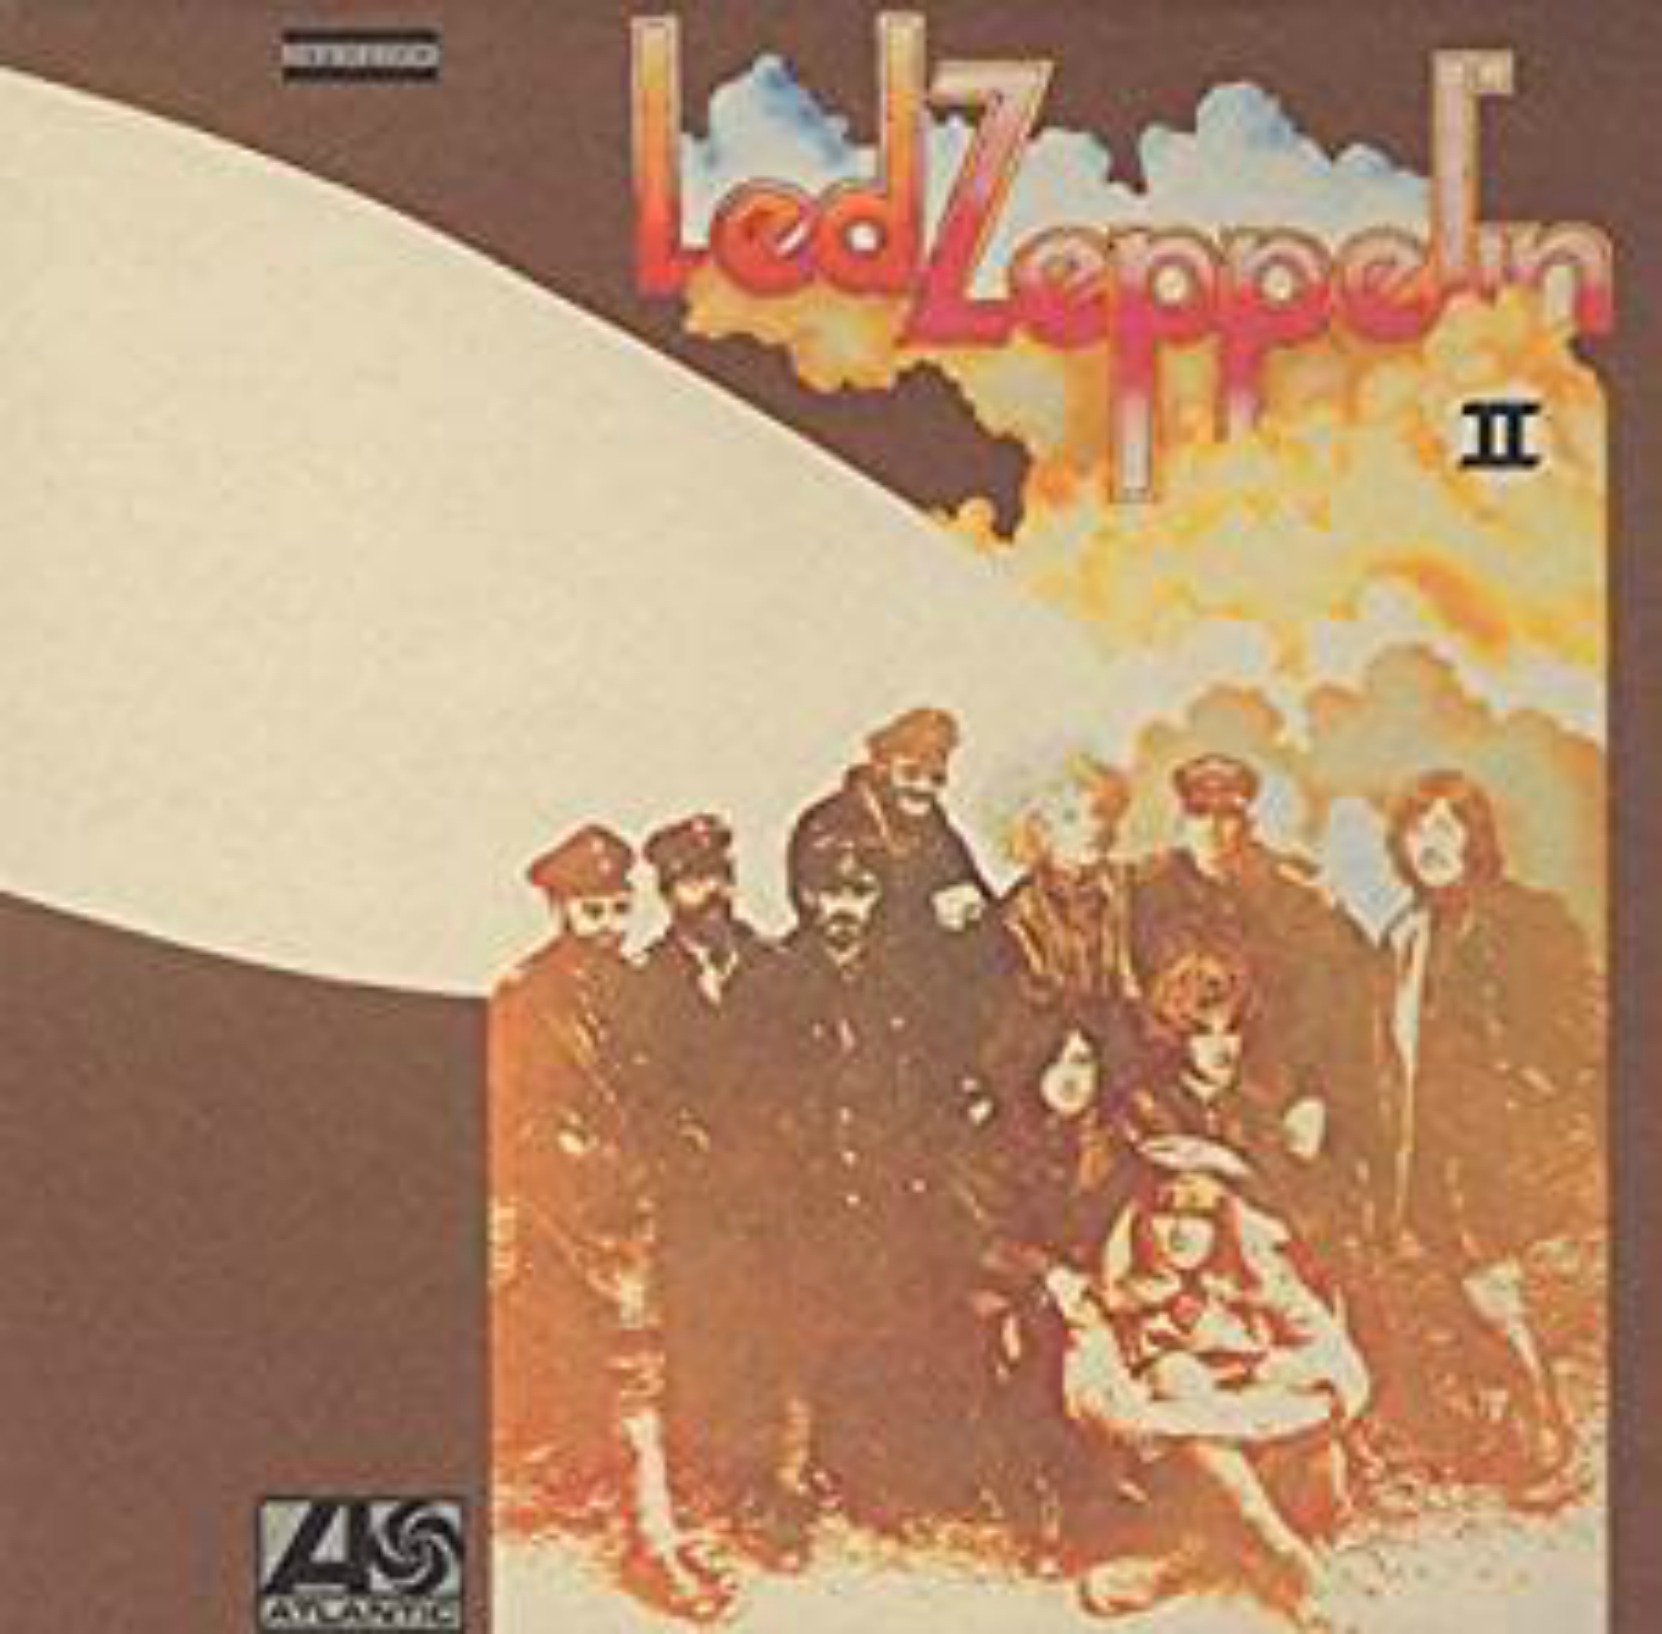 Album cover - Led Zeppelin II, released 1969